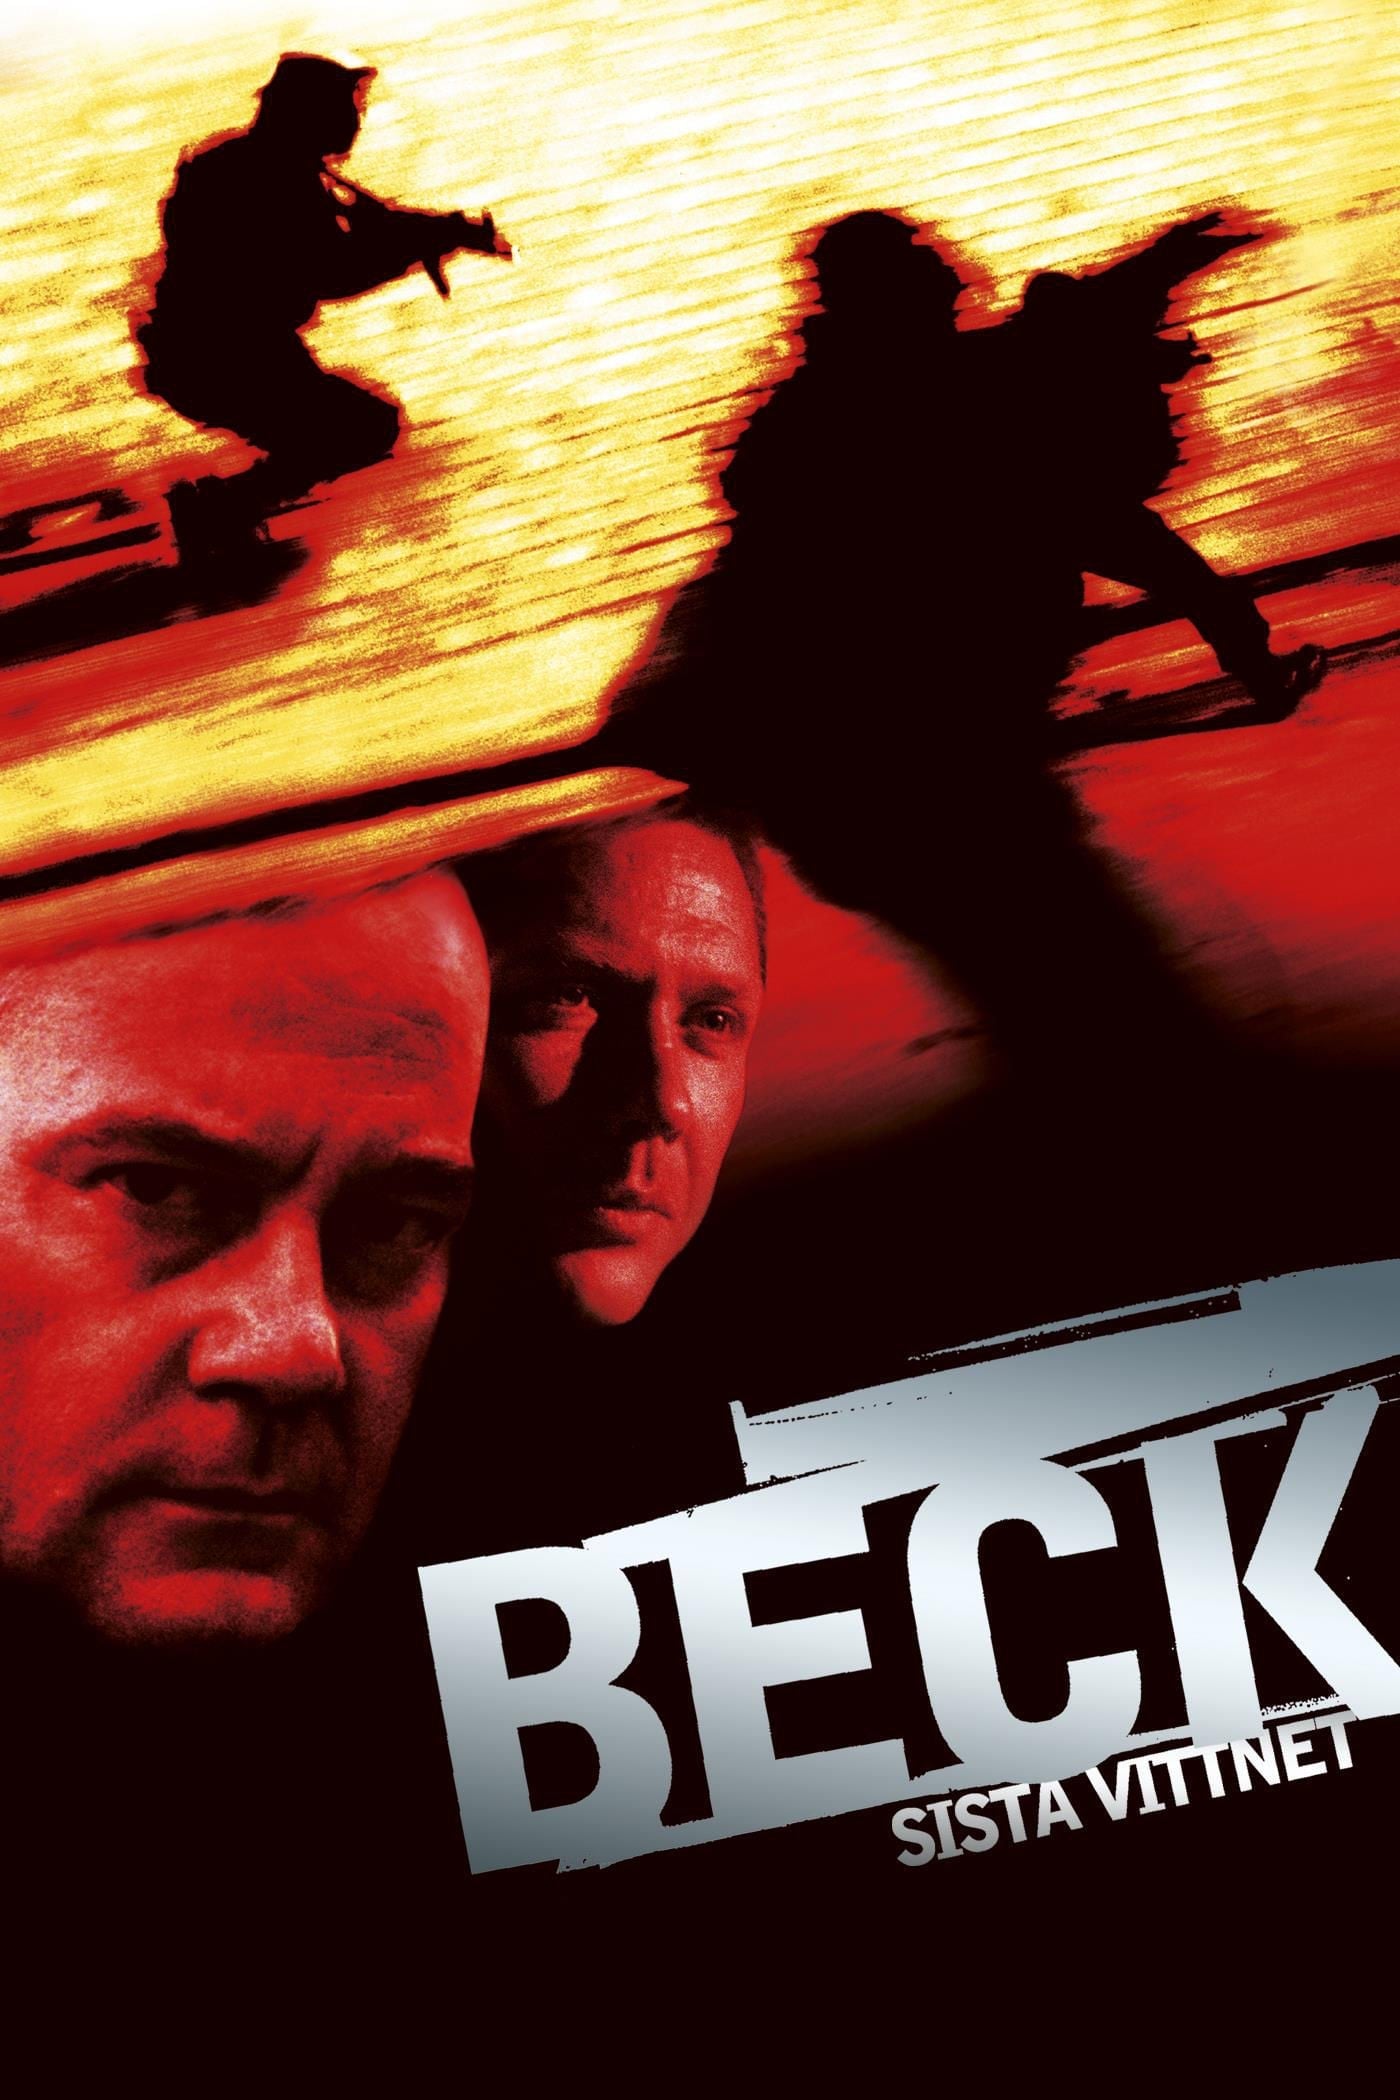 Beck 16 - Sista vittnet film